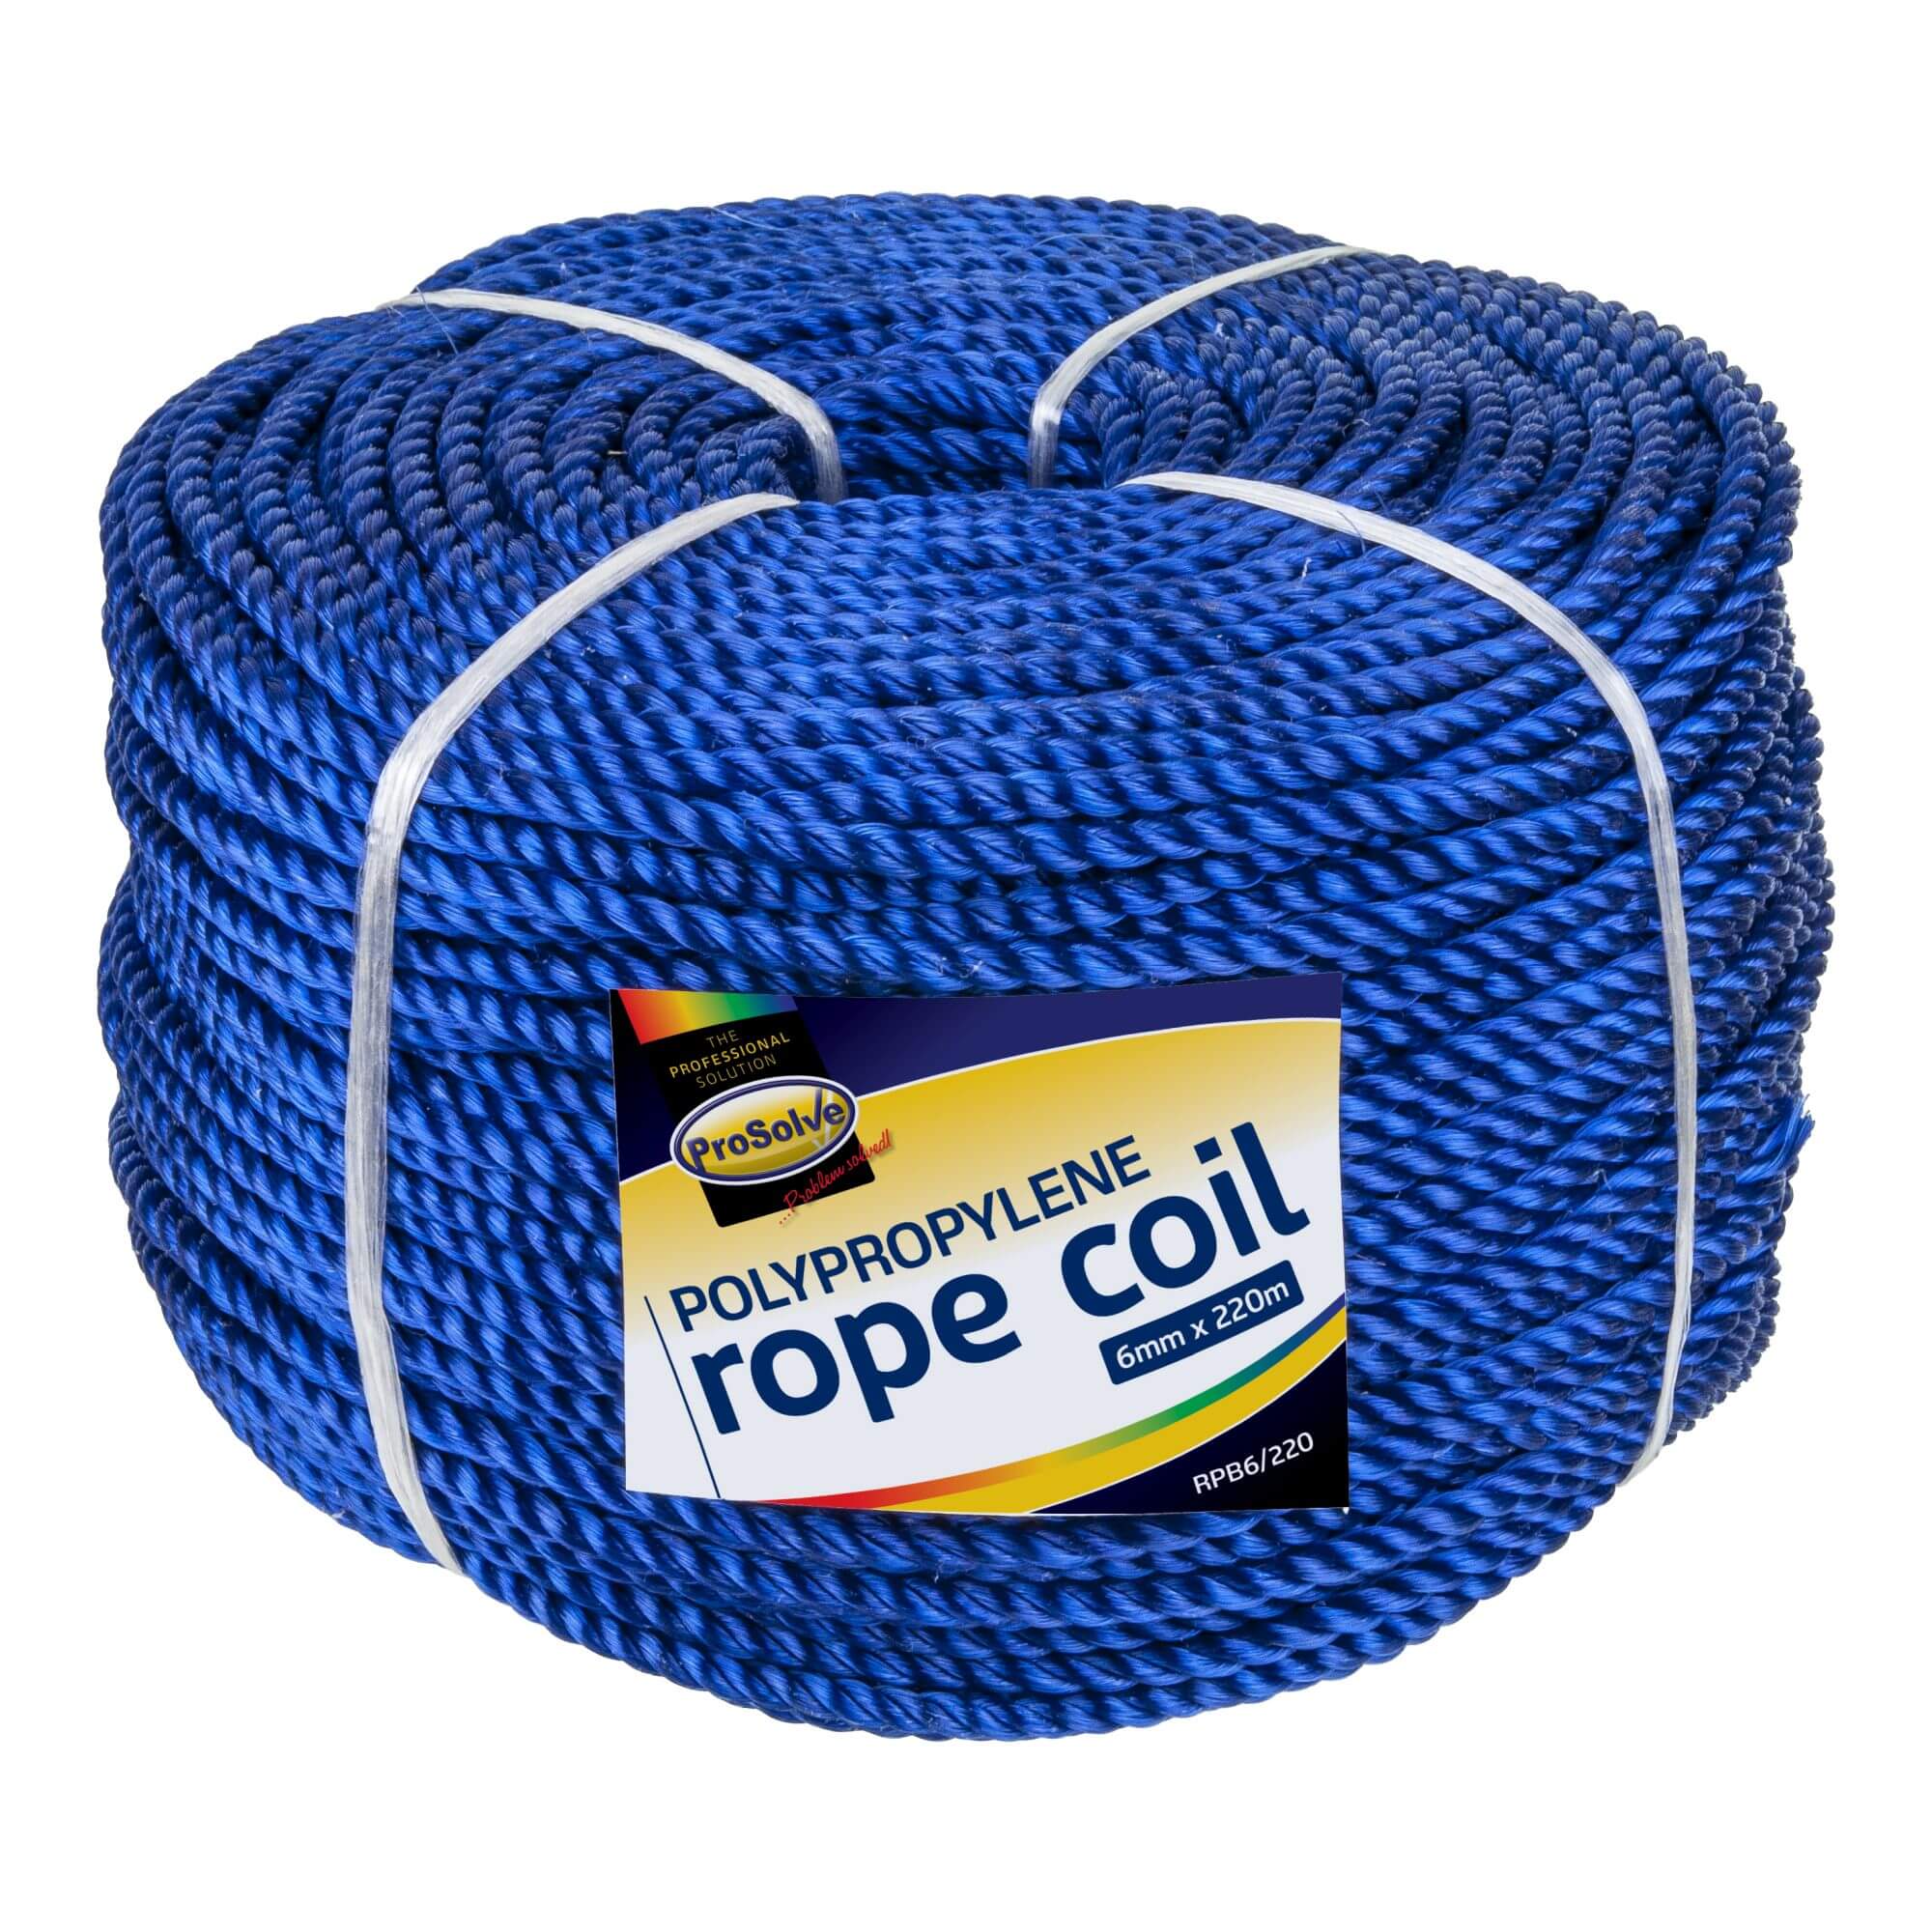 Polypropylene rope 6mm x 220m